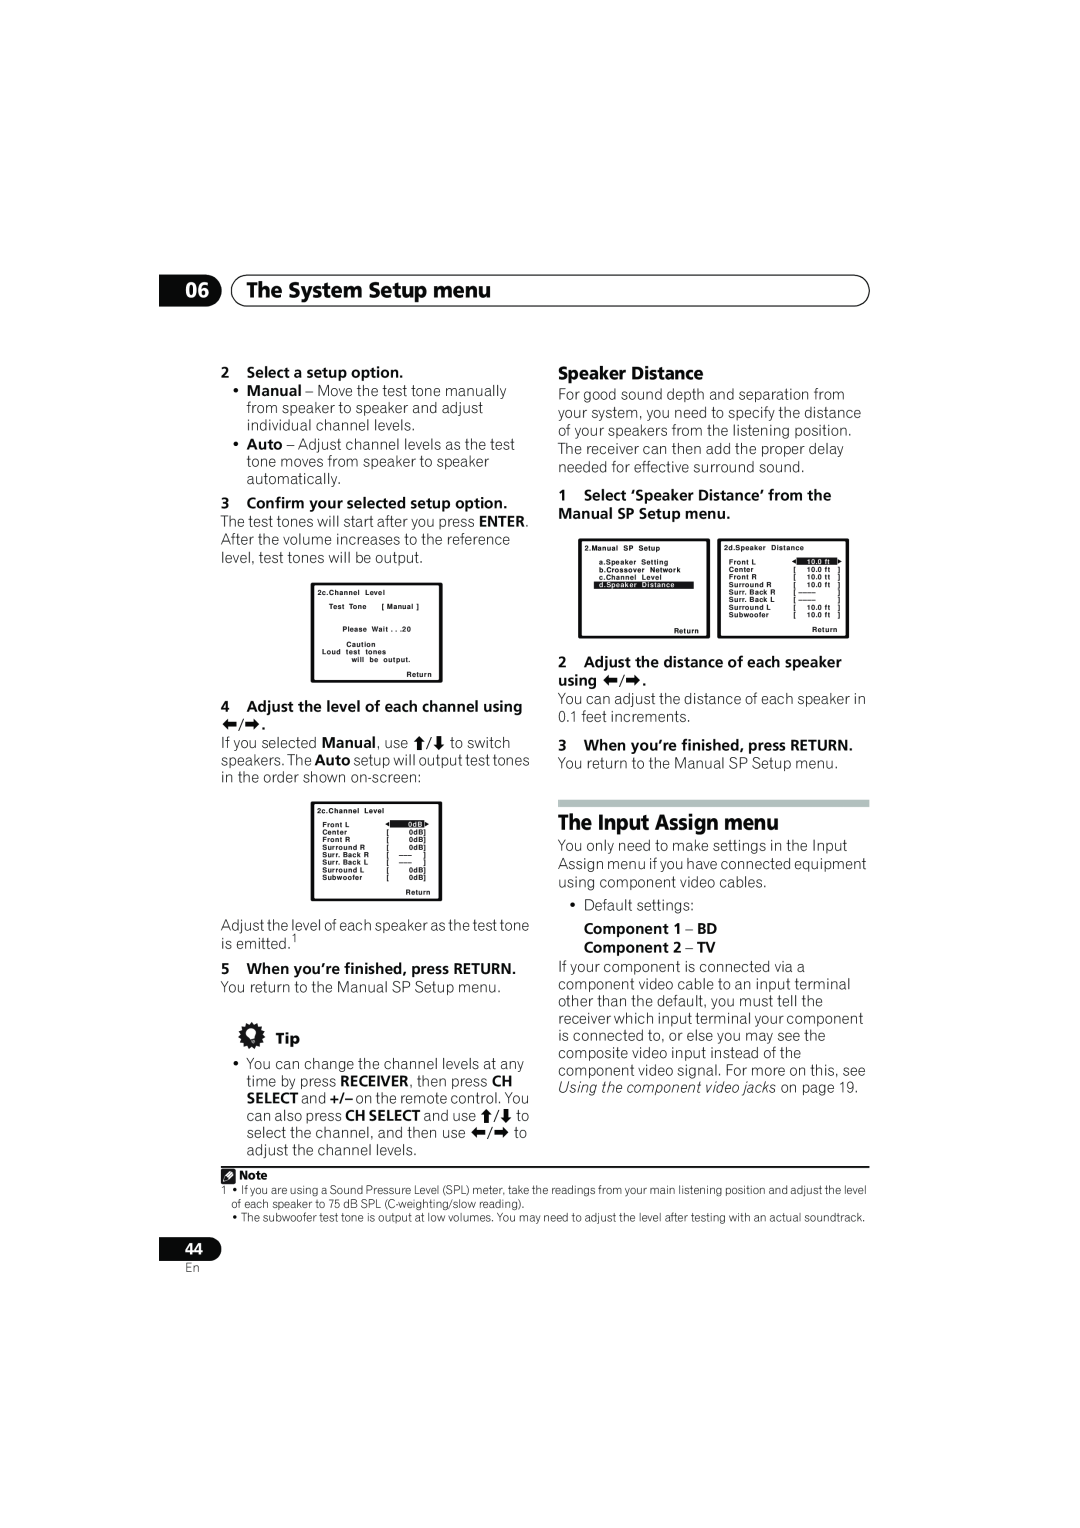 Pioneer VSX-819H-K manual The Input Assign menu, Speaker Distance, 06The System Setup menu 